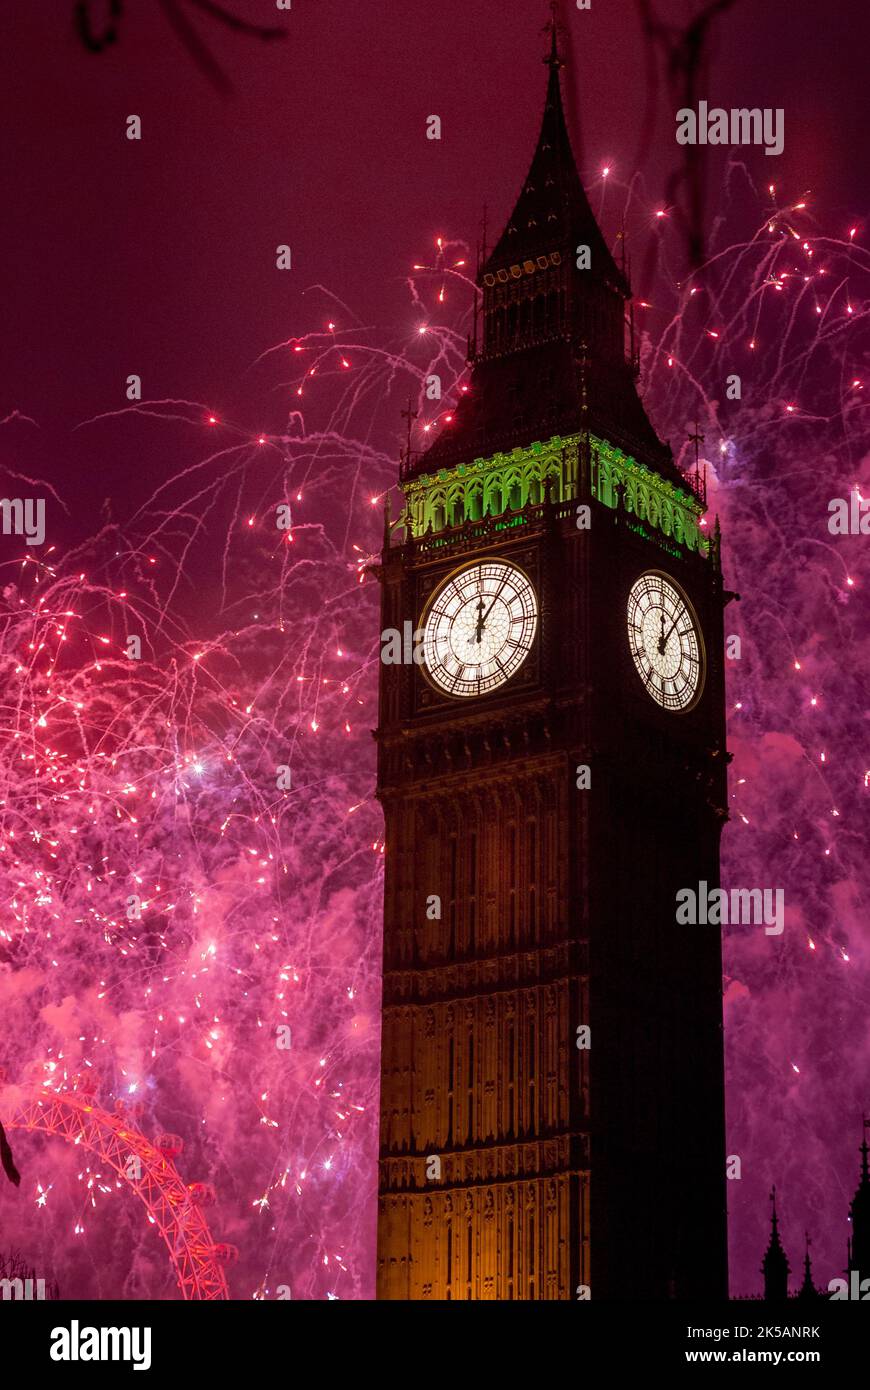 New Years Firework in London Stock Photo